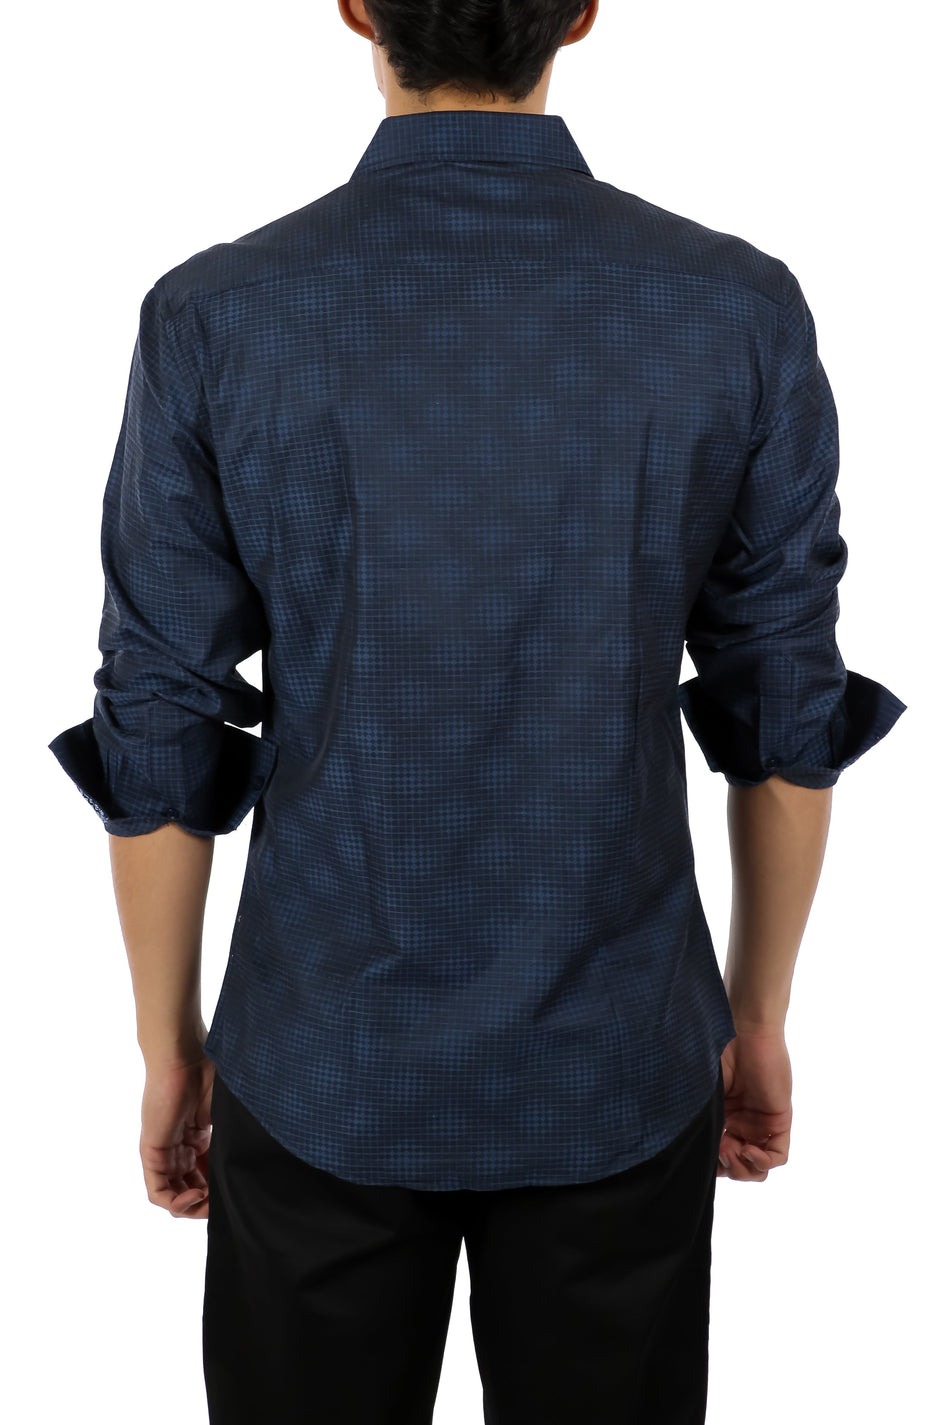 Crisscrossed Halftone Pattern Long Sleeve Dress Shirt Navy